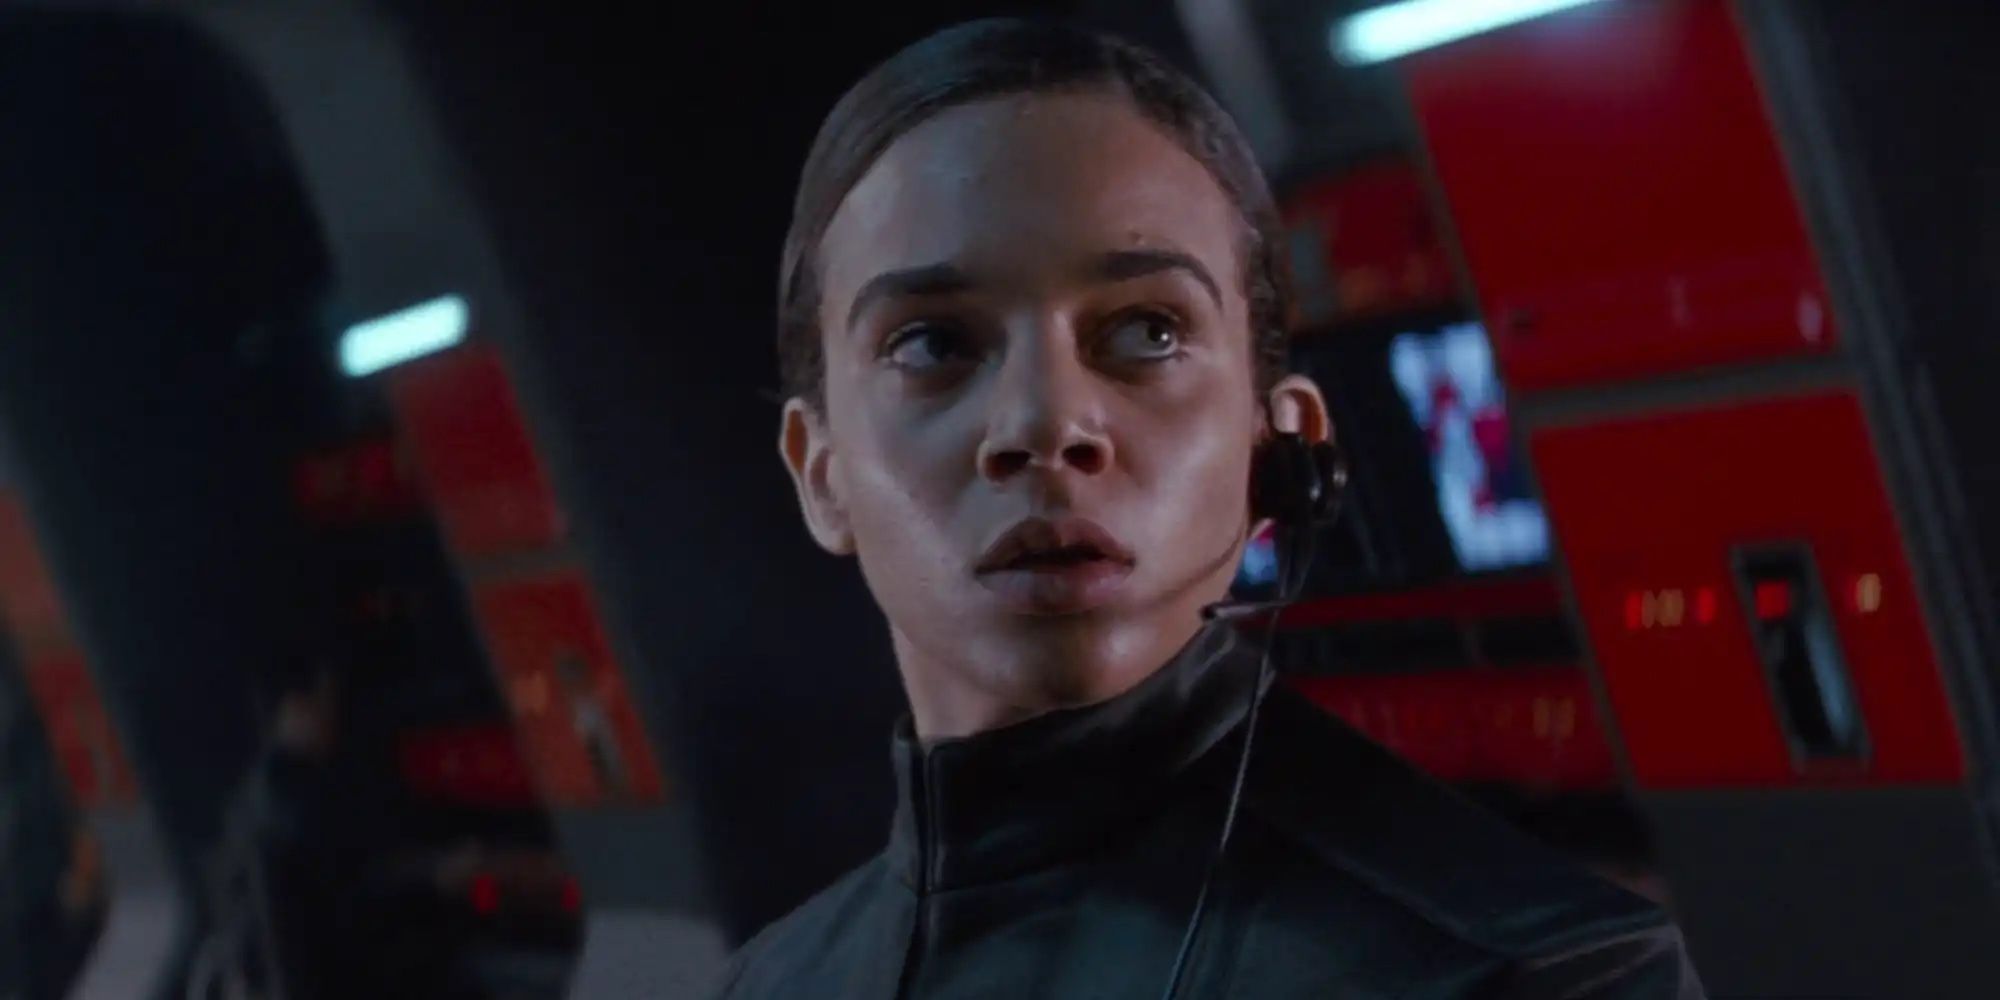 Hannah John-Kamen in Star Wars: The Force Awakens